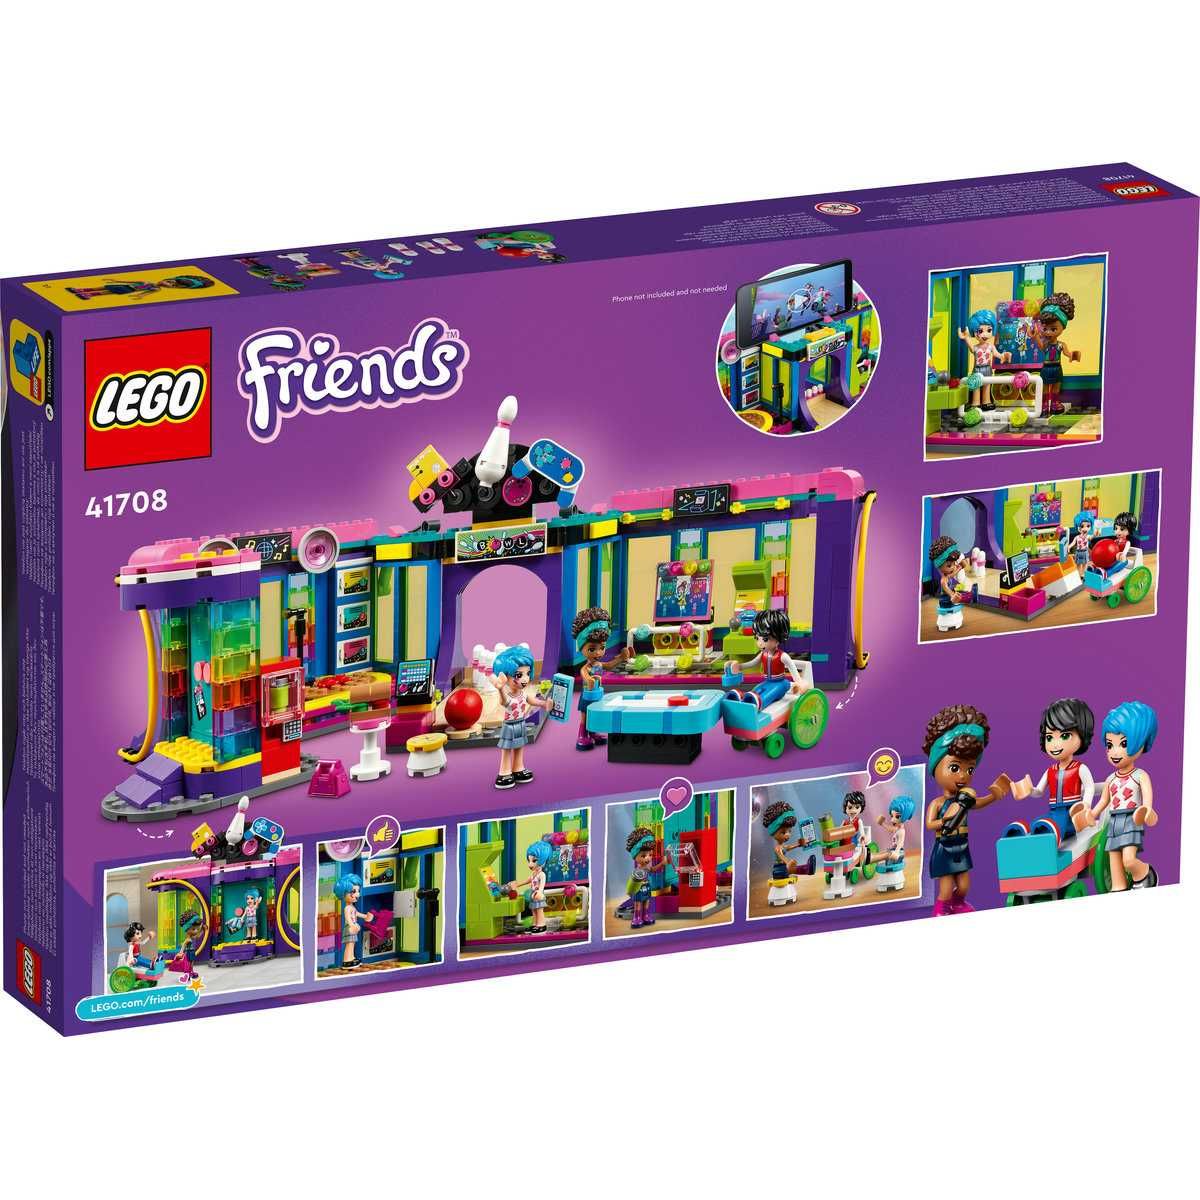 Lego friends Galeria disco cu jocuri electronice7+,642pcs, fara cutie